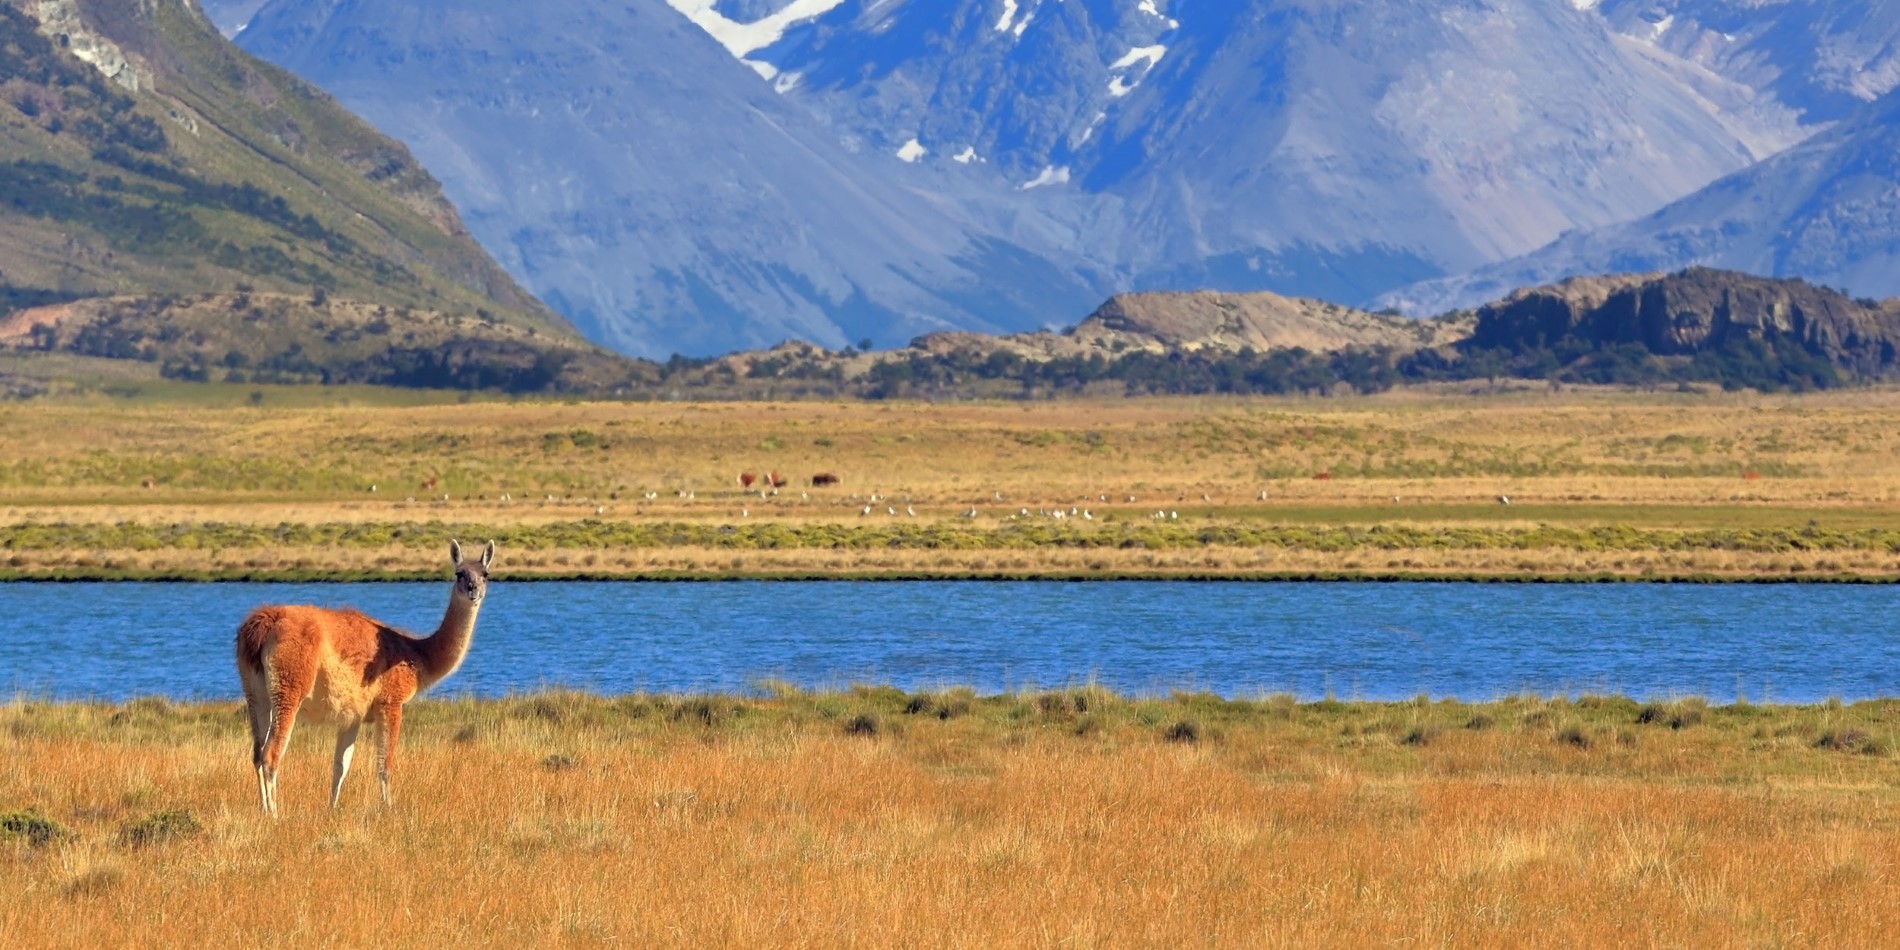 A guanaco enjoying the harmonious Patagonian landscape